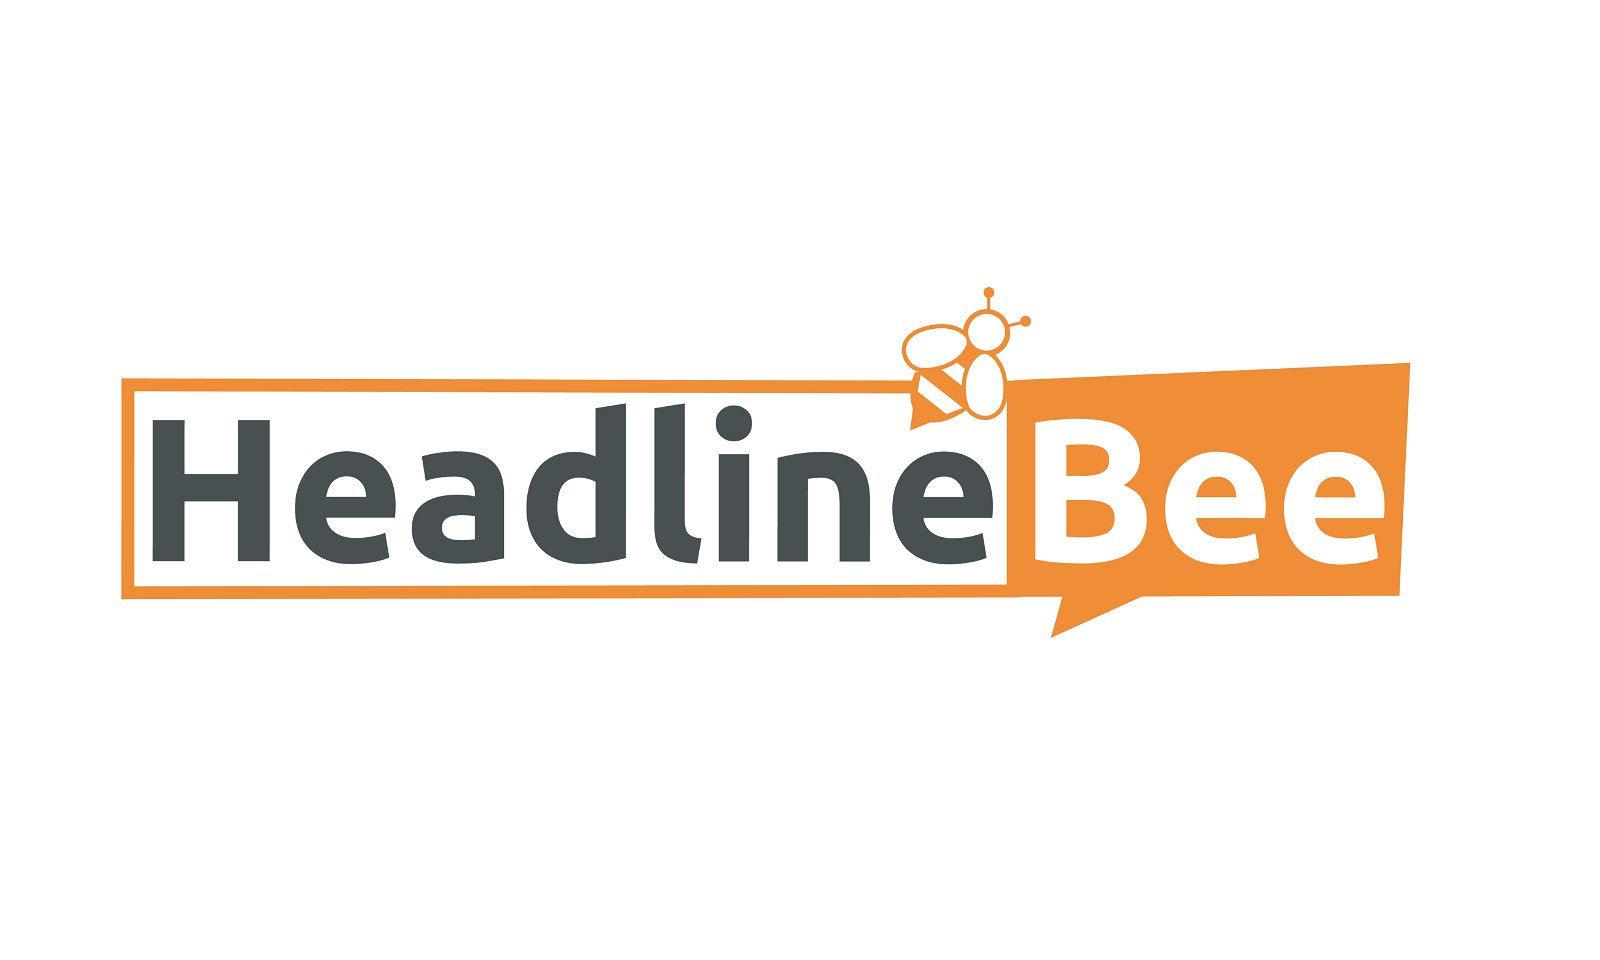 HeadlineBee.com - Creative brandable domain for sale